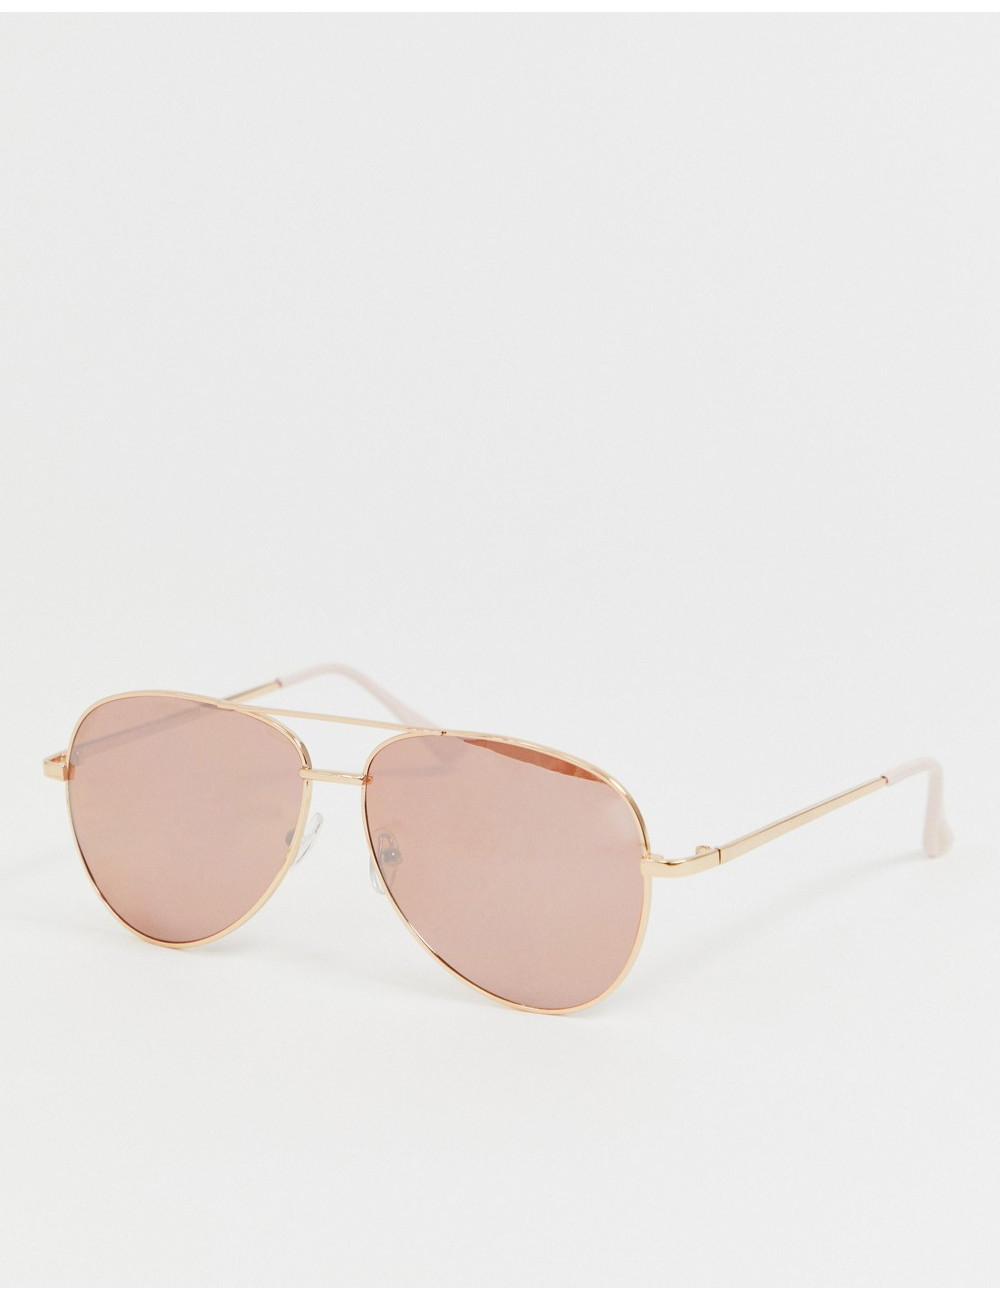 Oasis aviator sunglasses in...